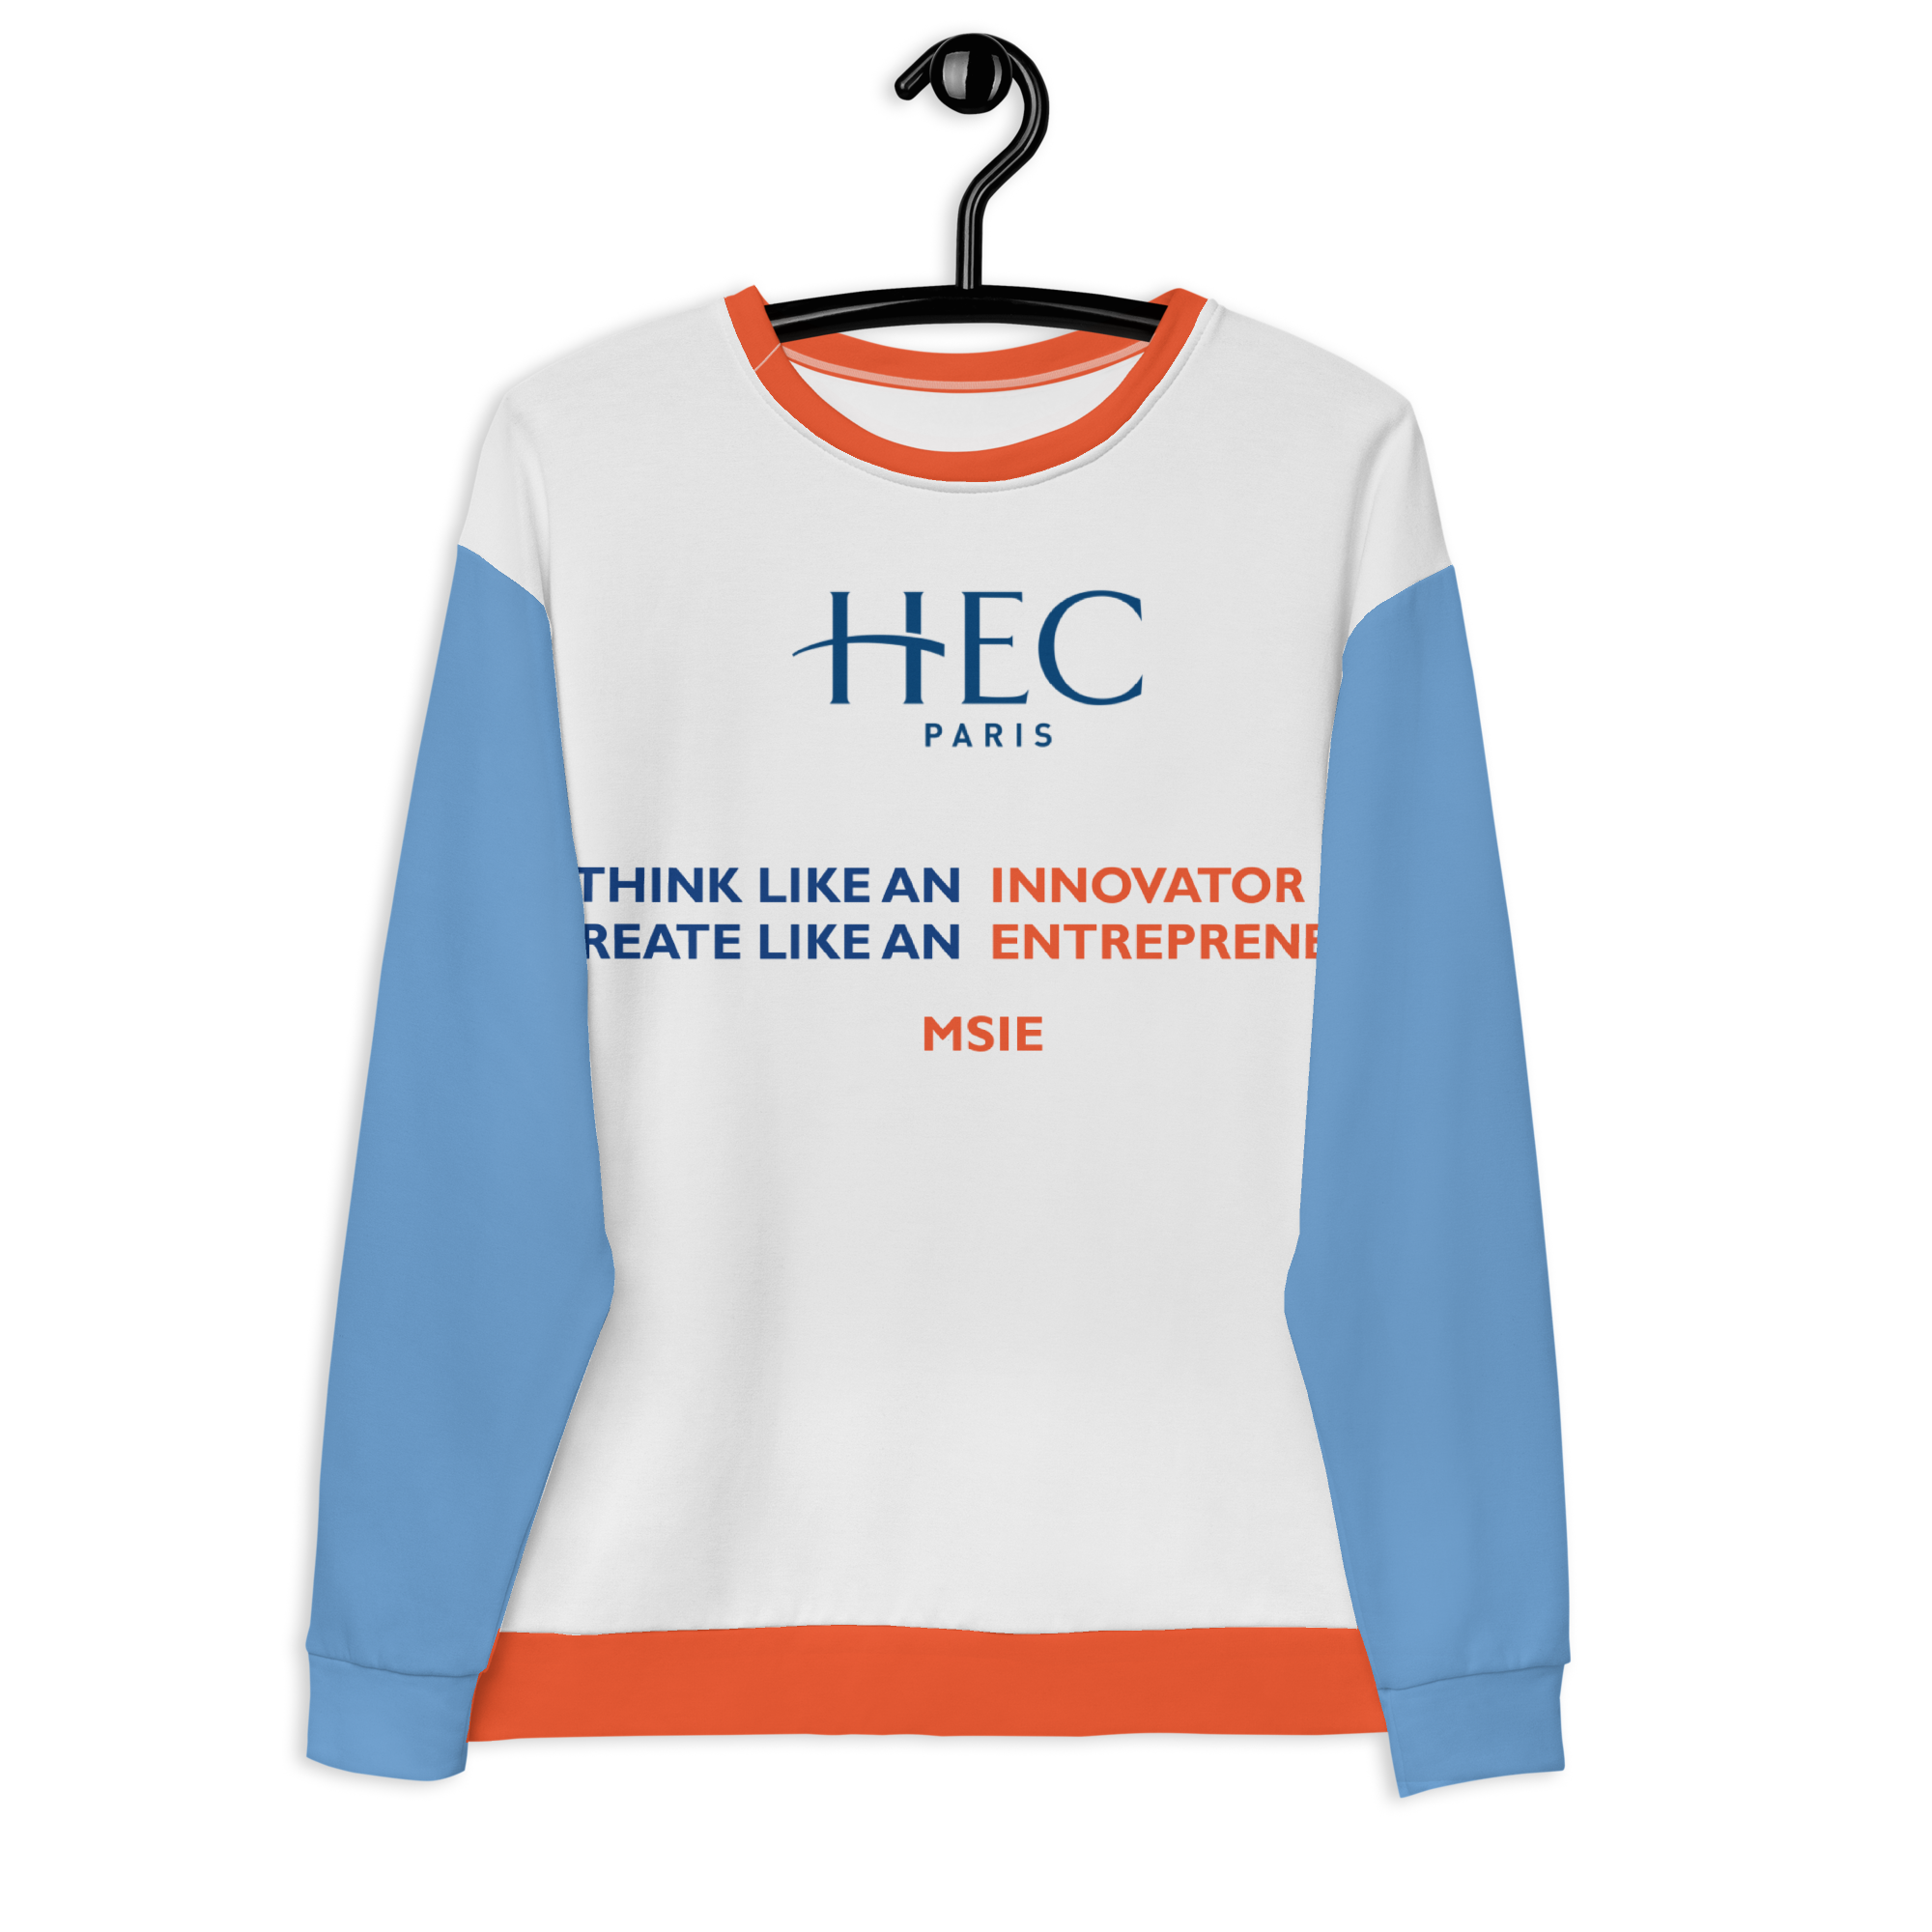 HEC Paris MSIE "THINK LIKE AN INNOVATOR CREATE LIKE AN ENTREPRENEUR" Unisex Sweatshirt